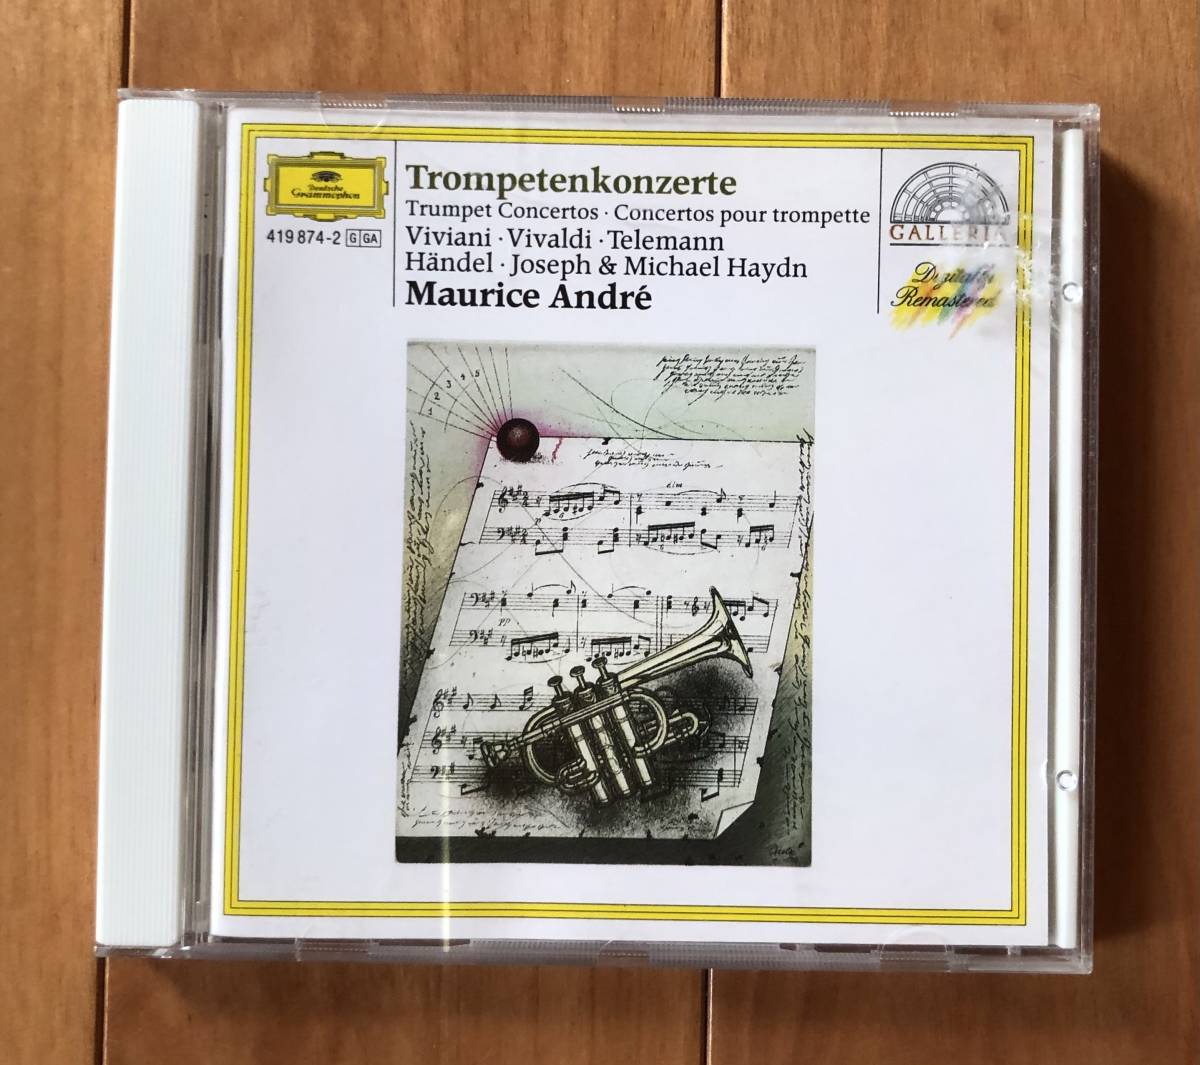 4CD TELEMANN, G. P. Telemann Musique 2564687041 Teldec Classics ...